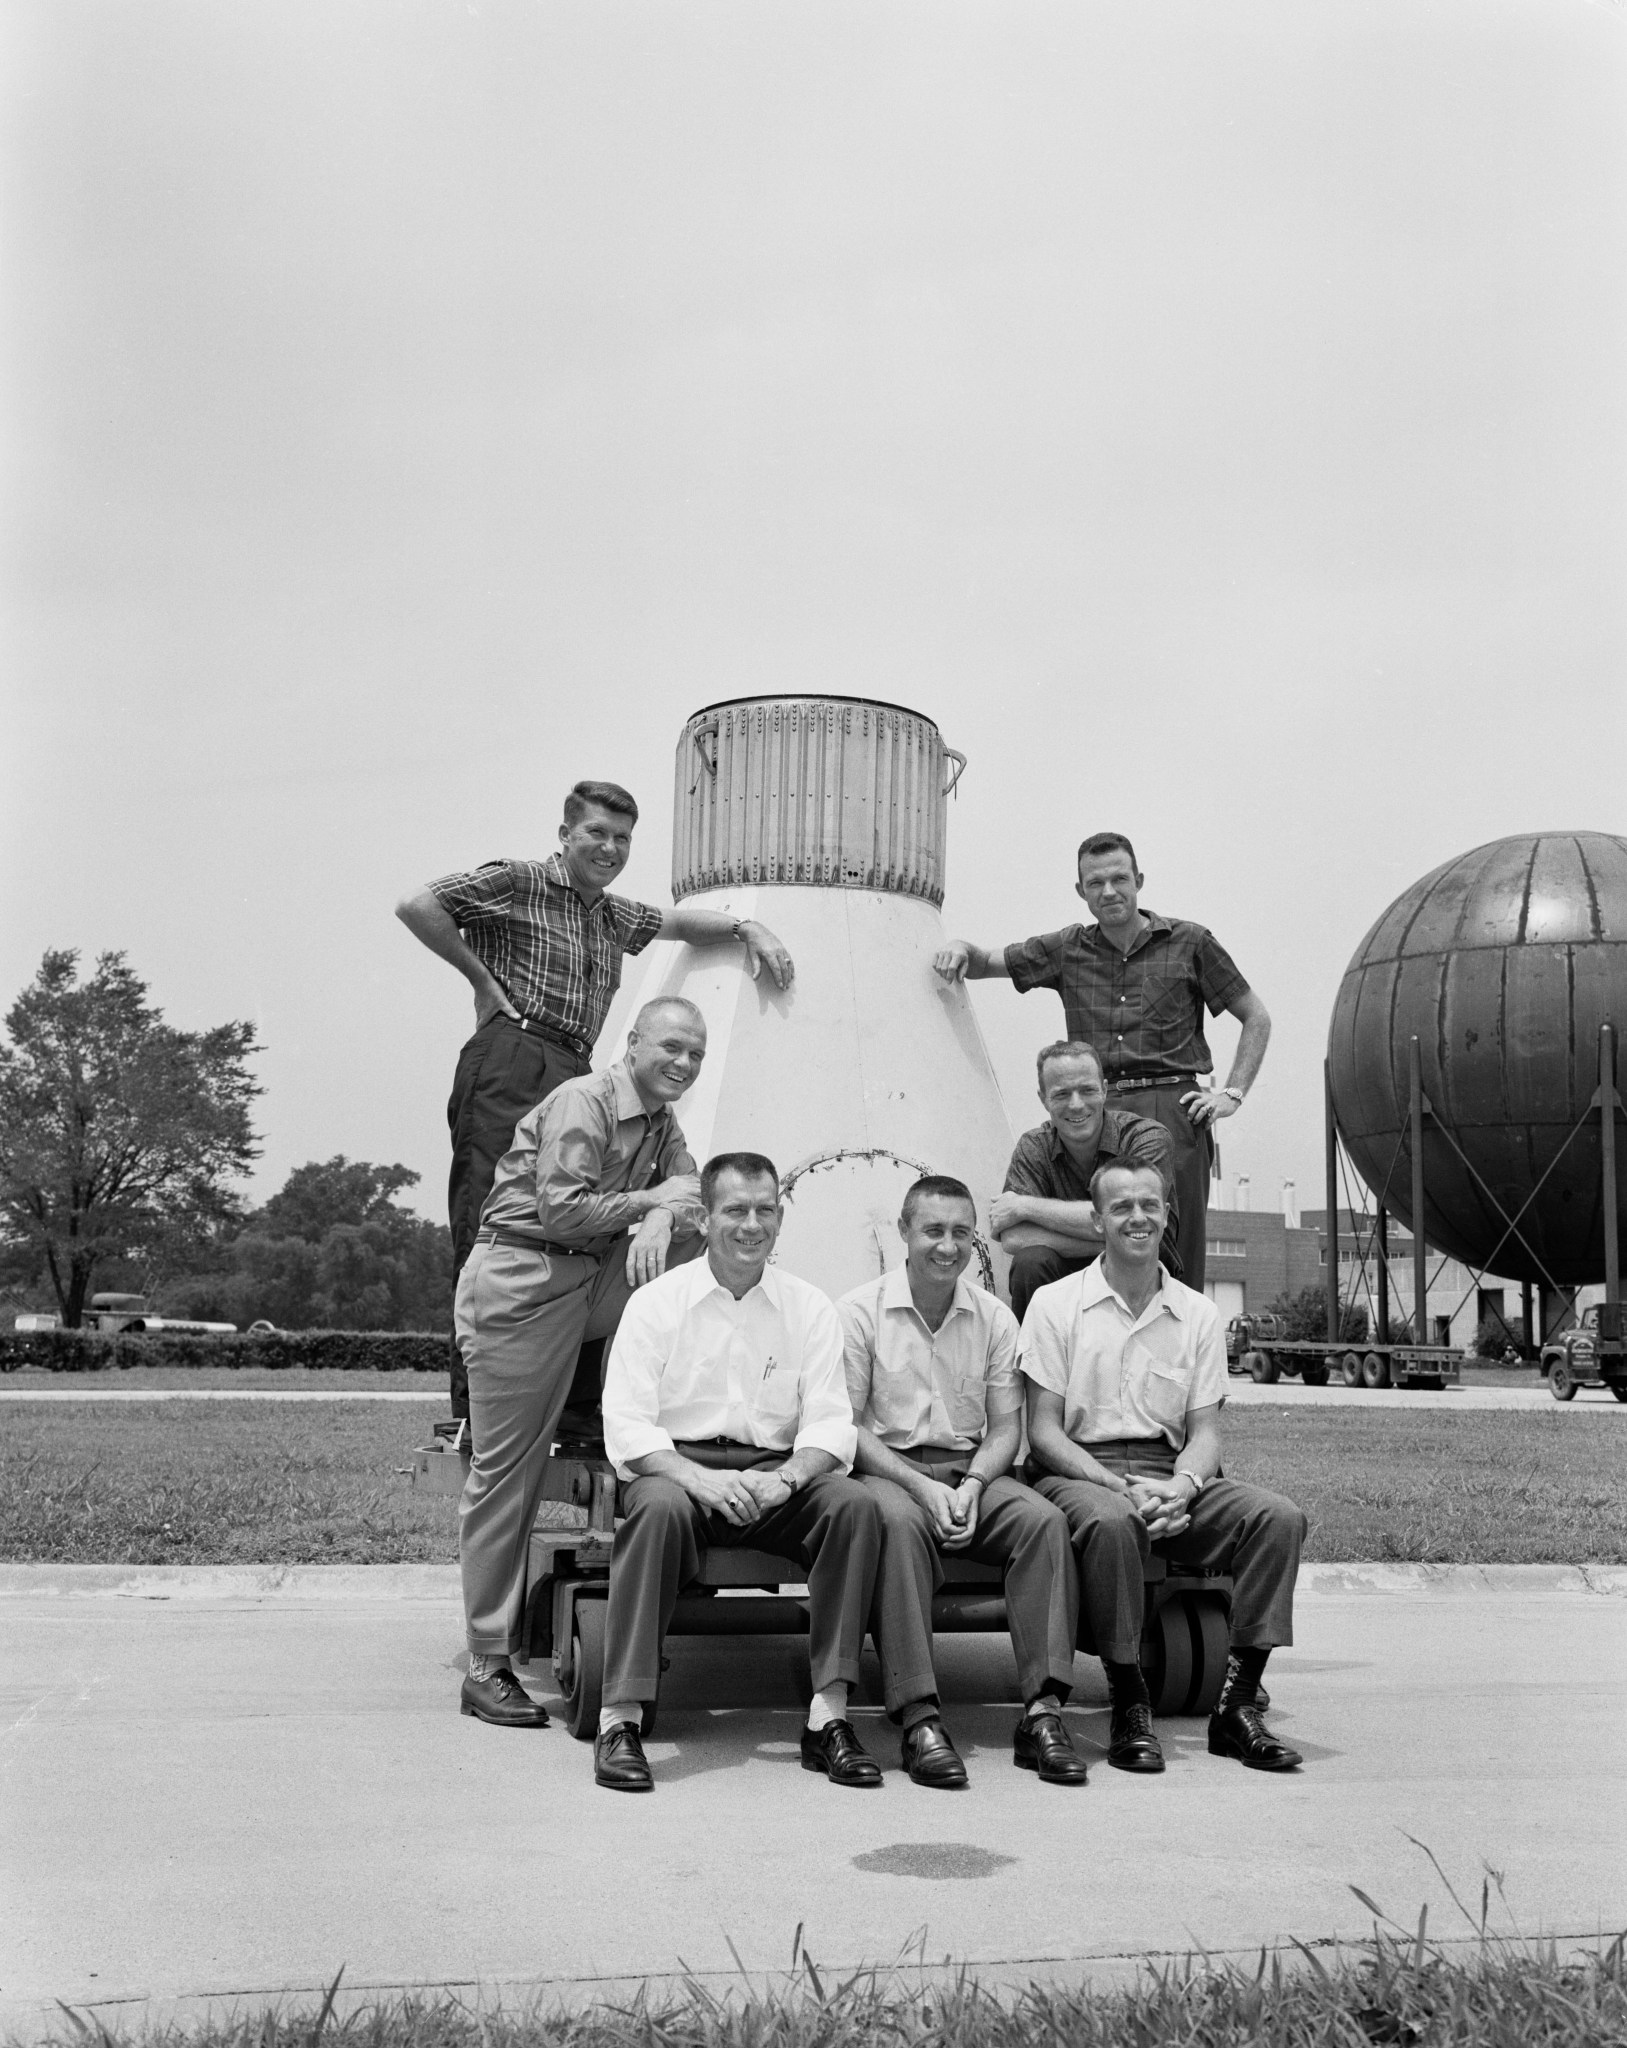 The Mercury 7 astronauts pose around a boilerplate capsule